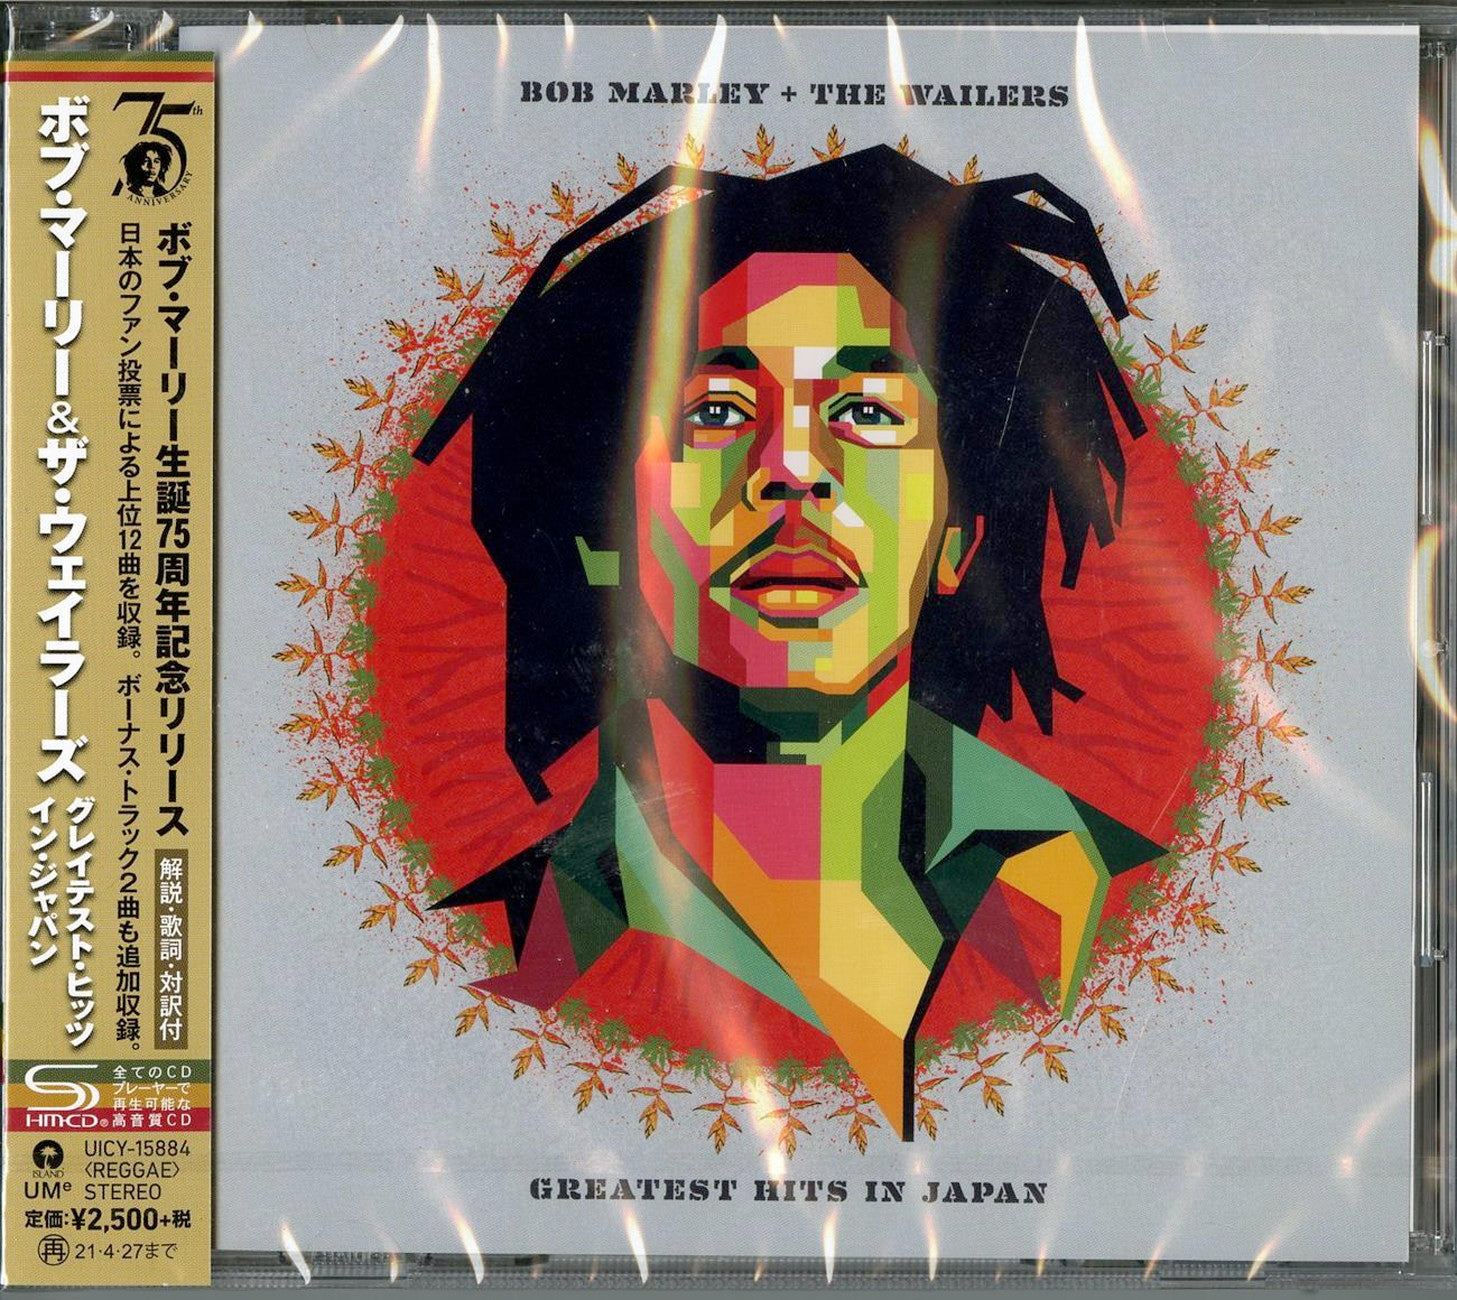 Bob Marley & The Wailers - Greatest Hits In Japan - SHM-CD – CDs Vinyl  Japan Store Bob Marley & The Wailers, CD, Reggae, SHM-CD, Ska, Ska & Dub CDs